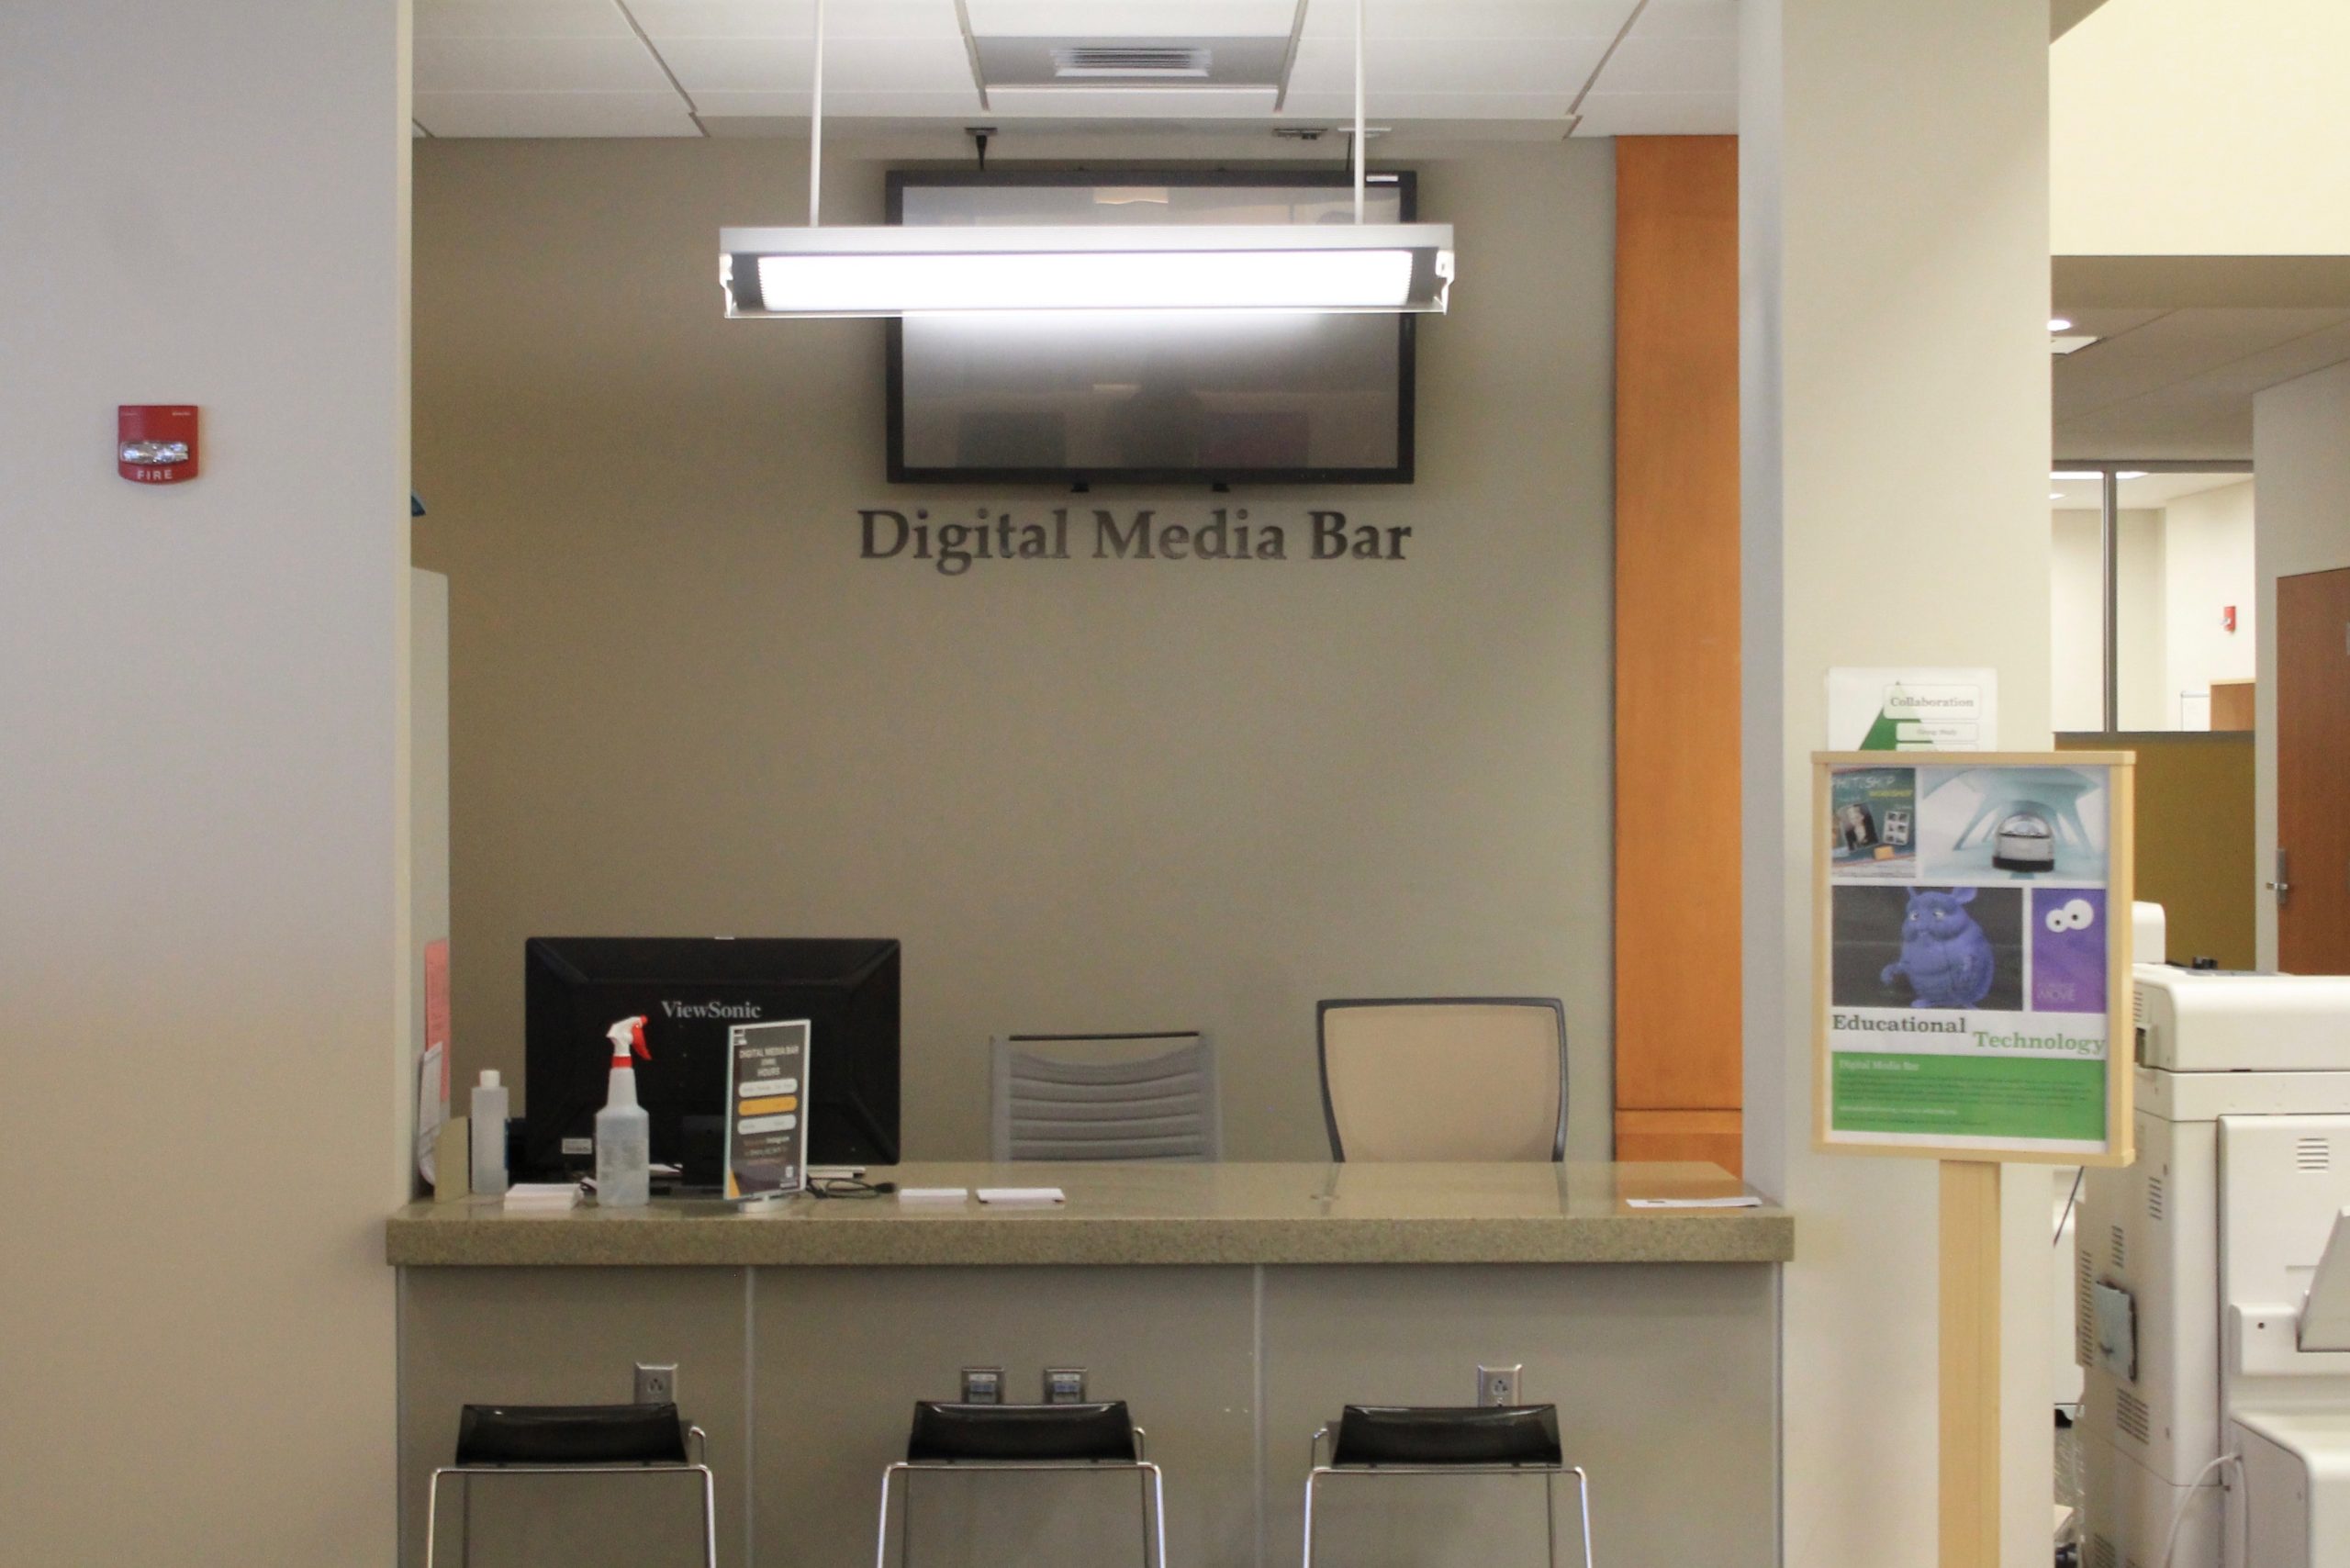 Image of the Digital Media Bar